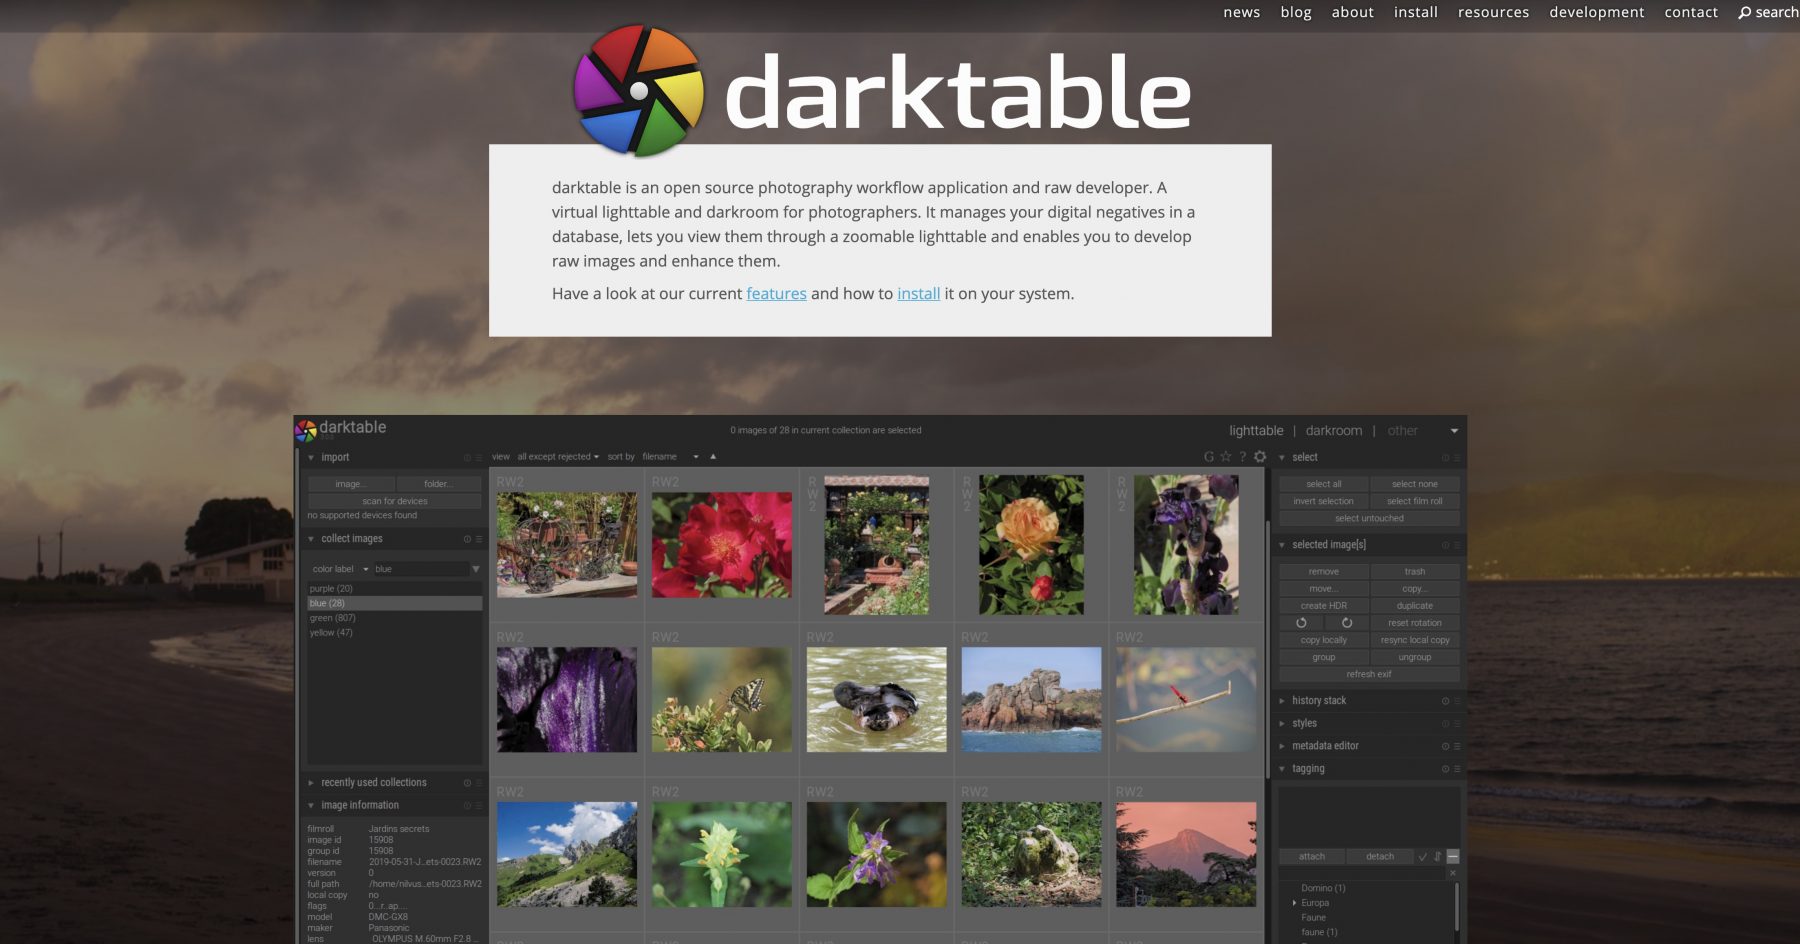 download the new version darktable 4.4.1